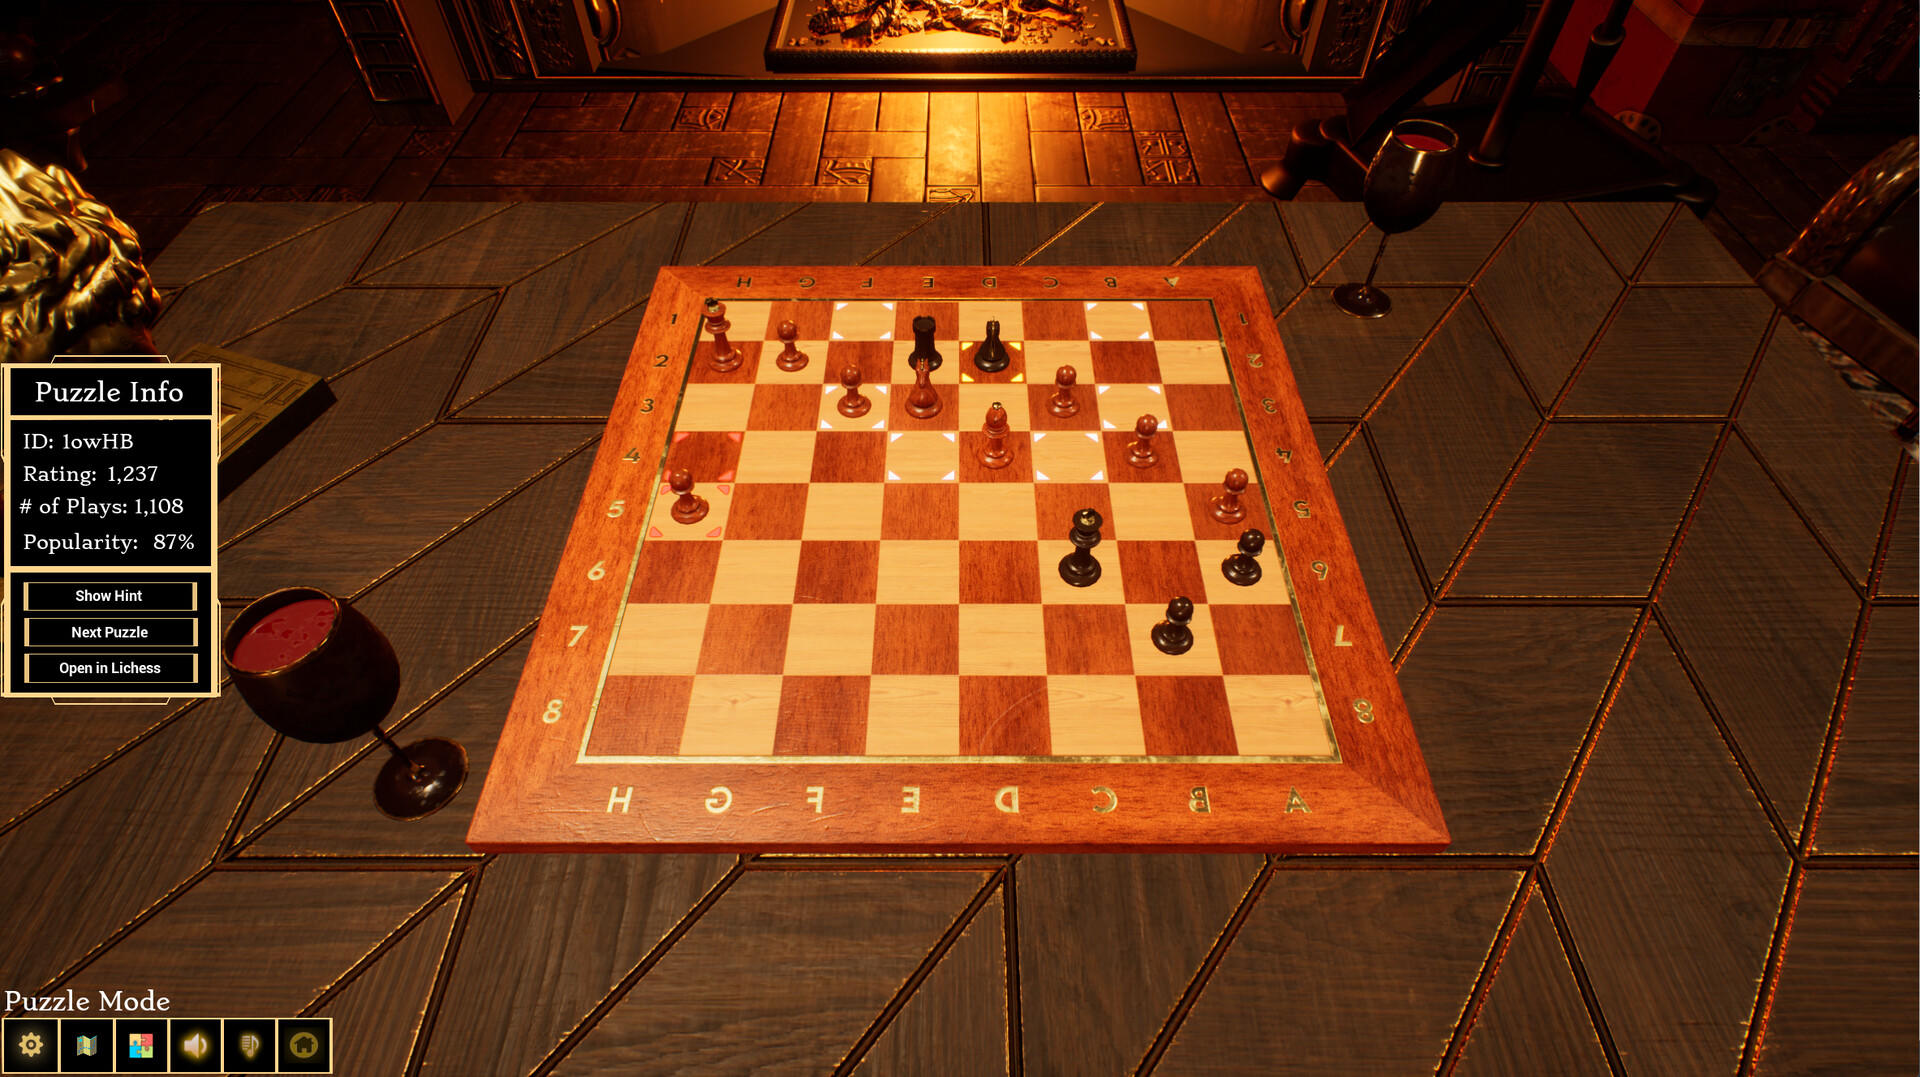 Chessium Batalha de Xadrez 3D versão móvel andróide iOS-TapTap